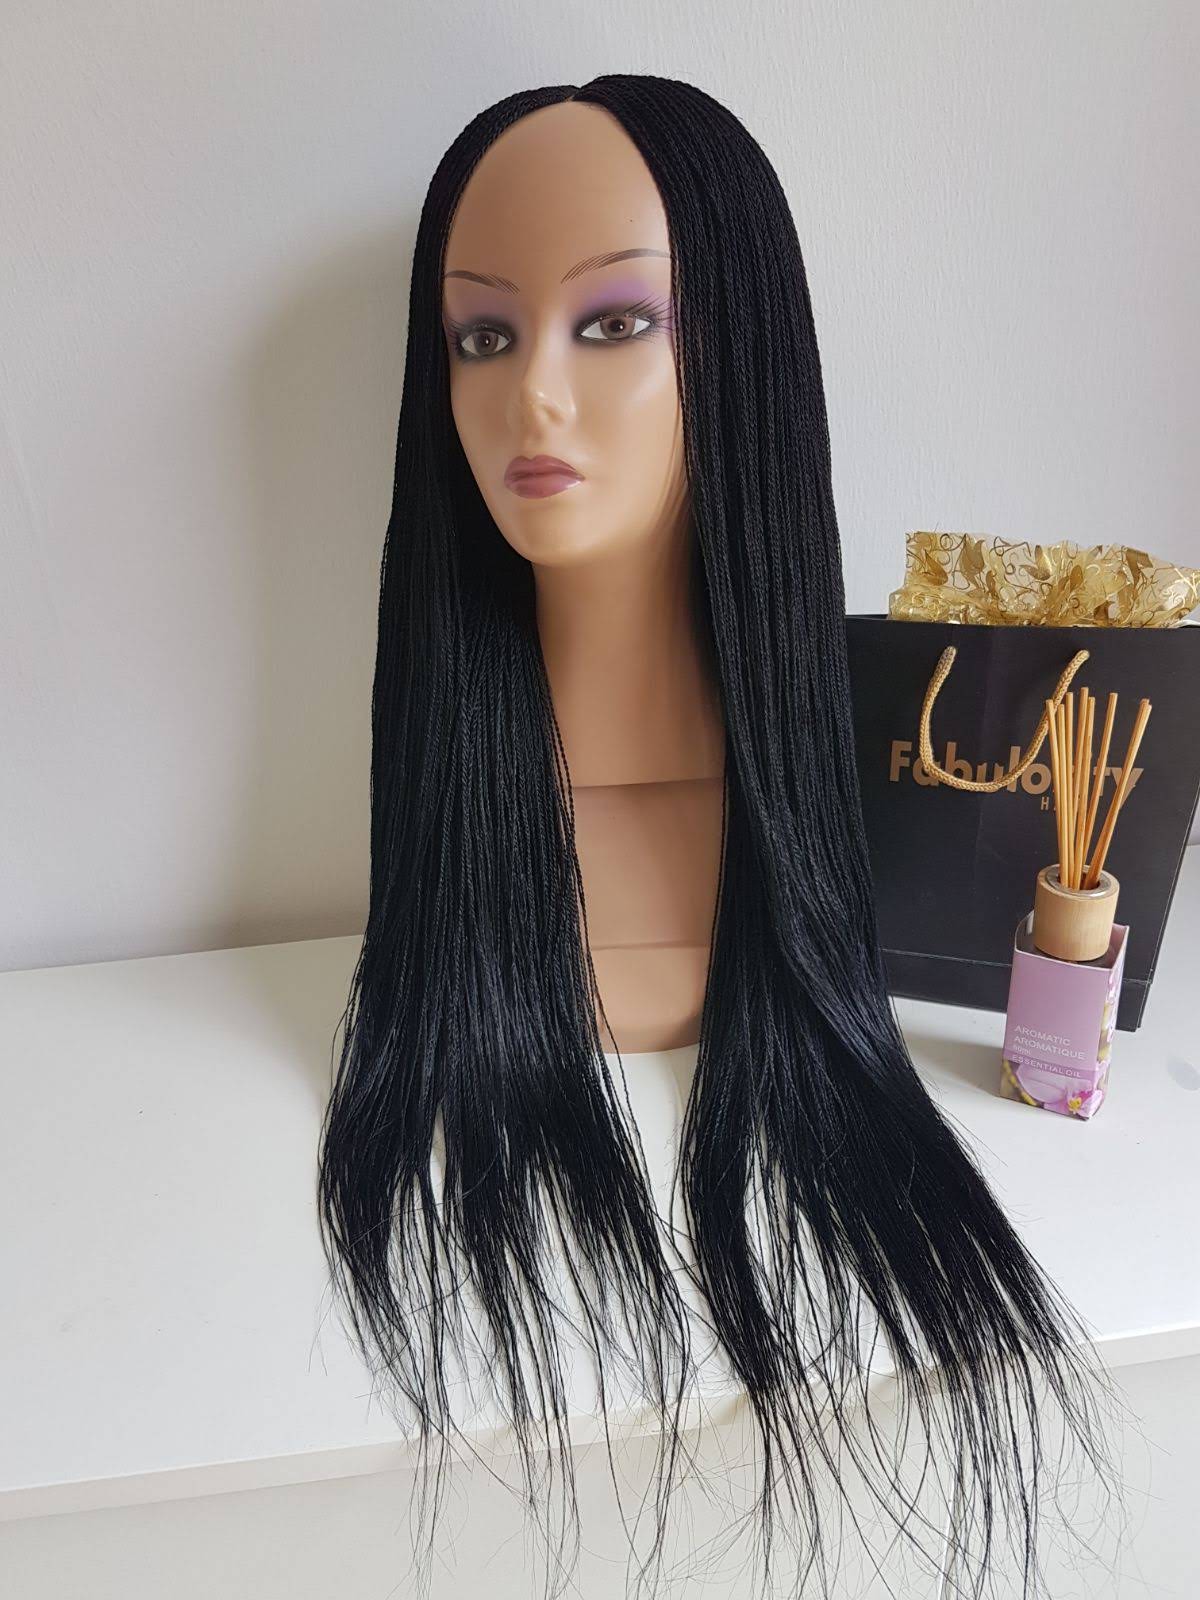 Braided wig with closure million twists (Black)